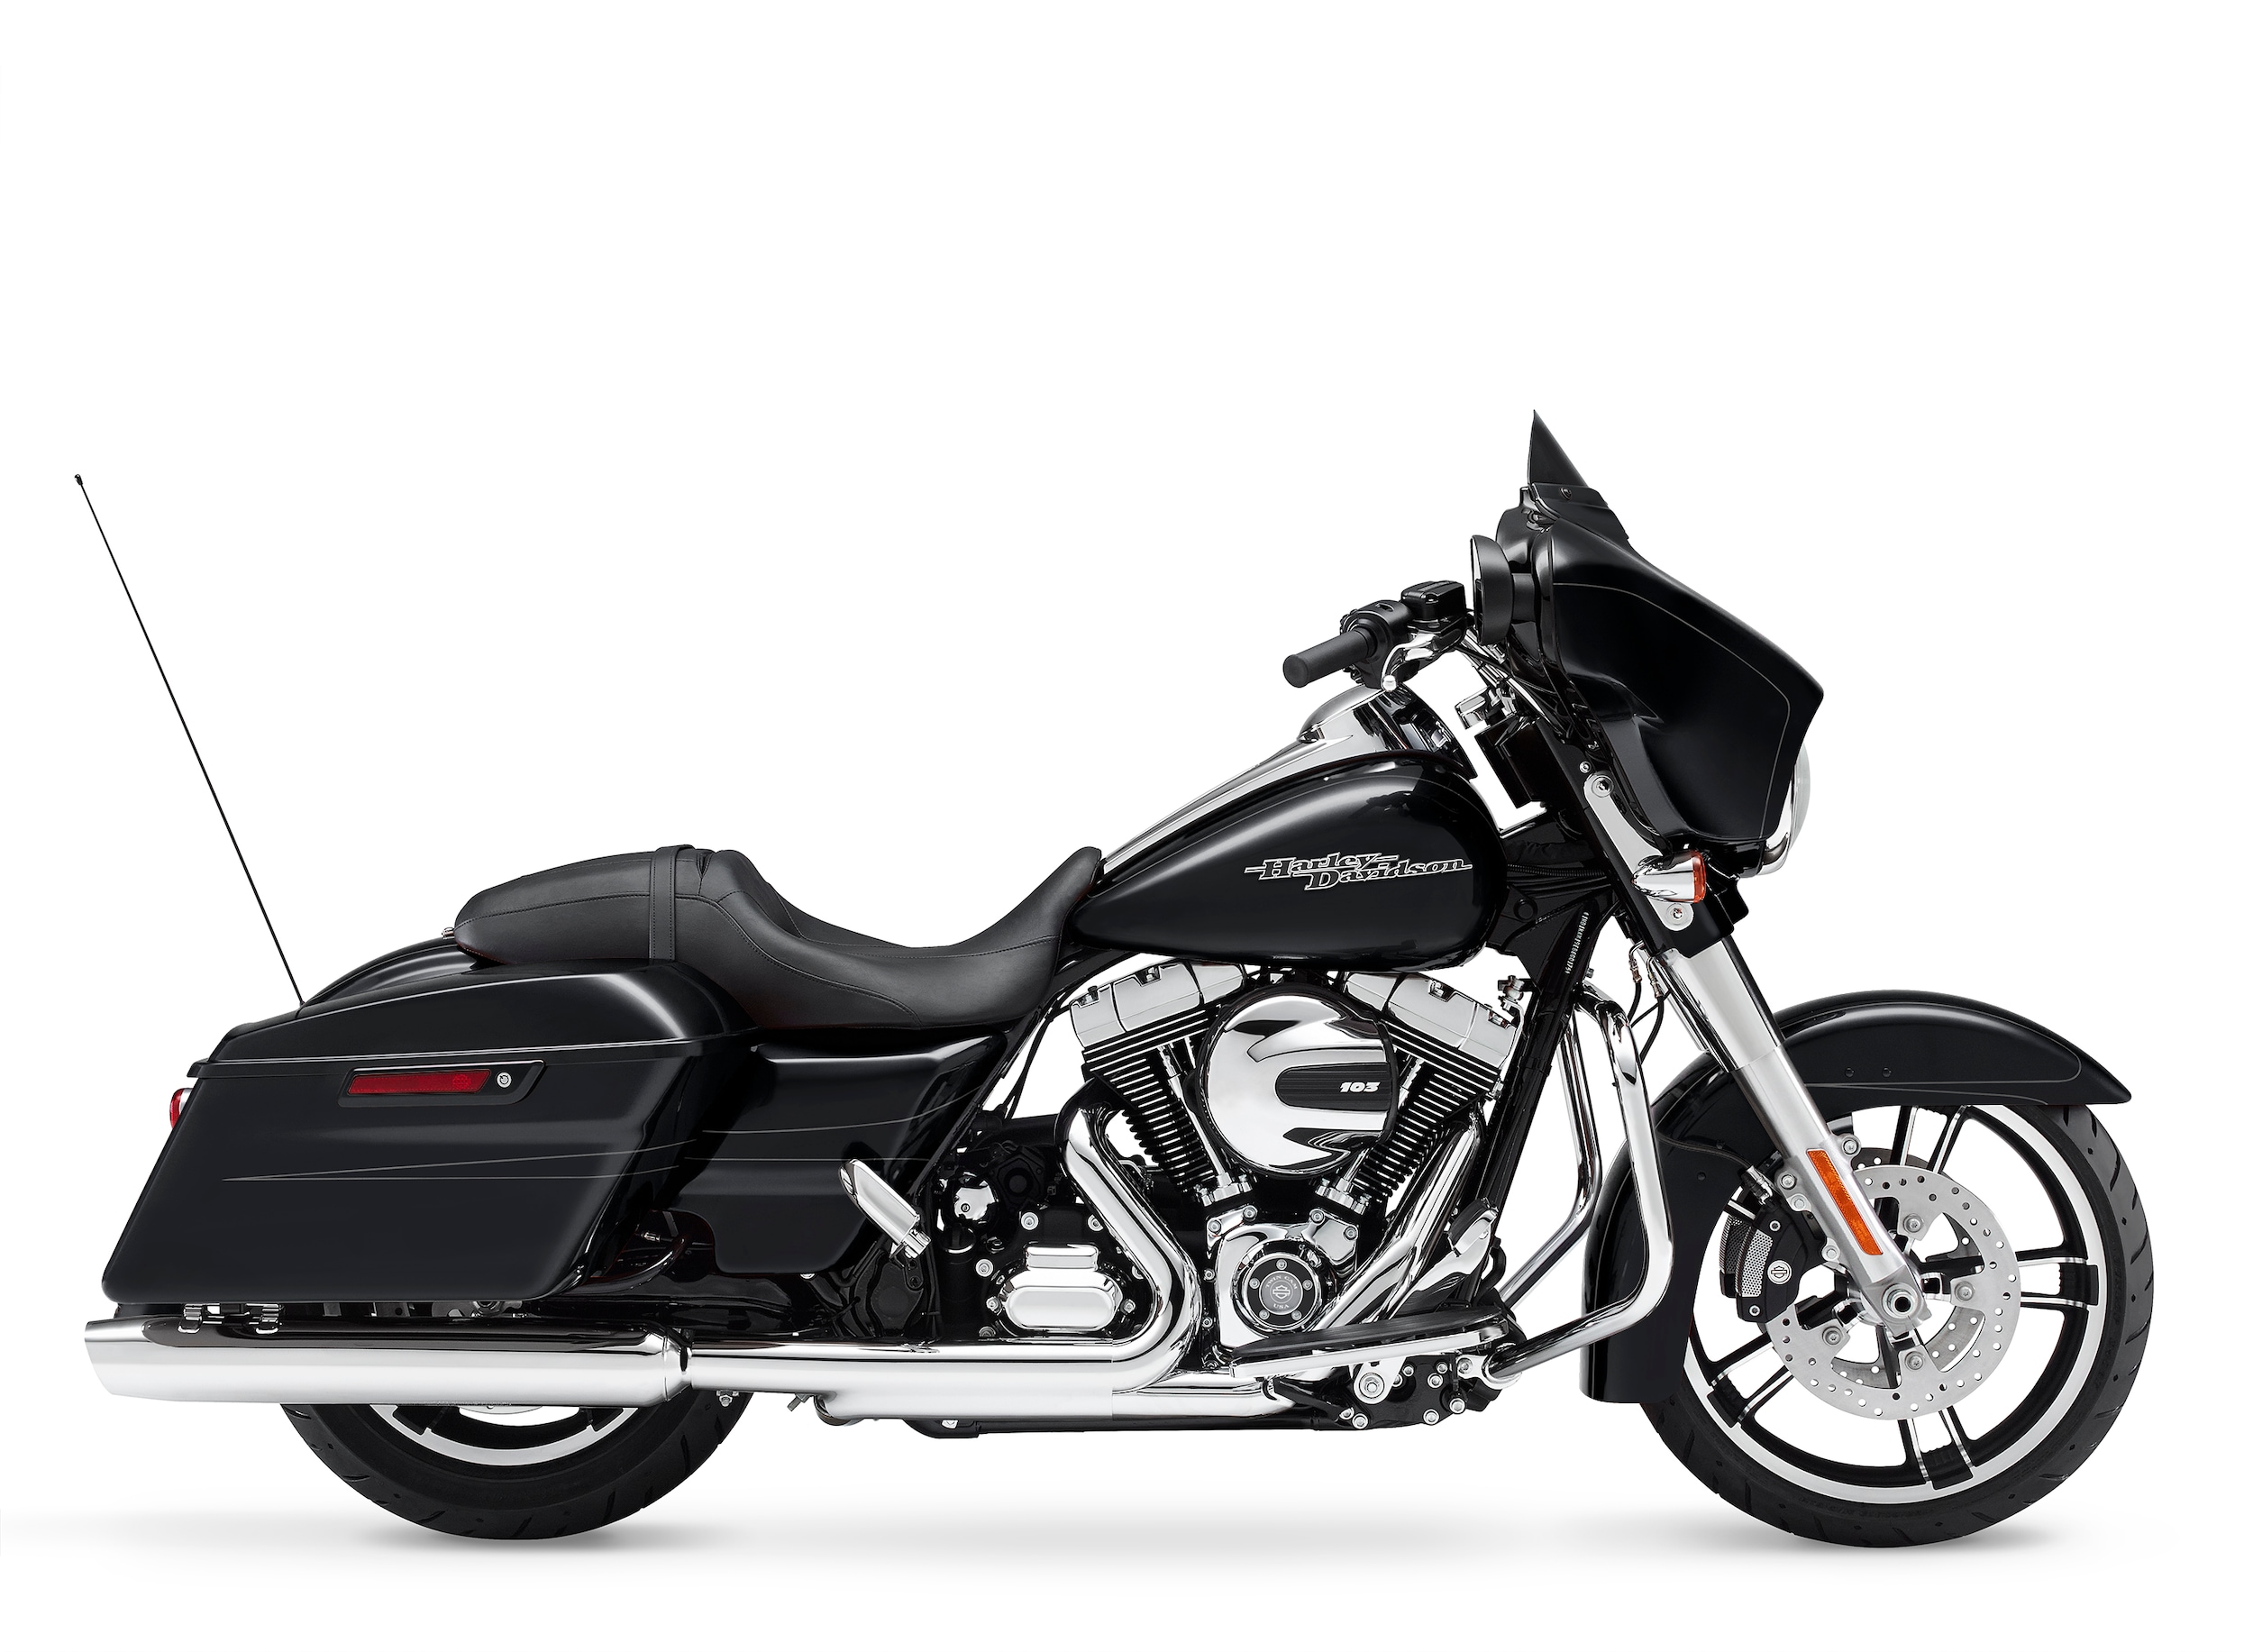 New 2015 Harley Davidson Street Glide Special Flhxs For Sale Olathe Ks